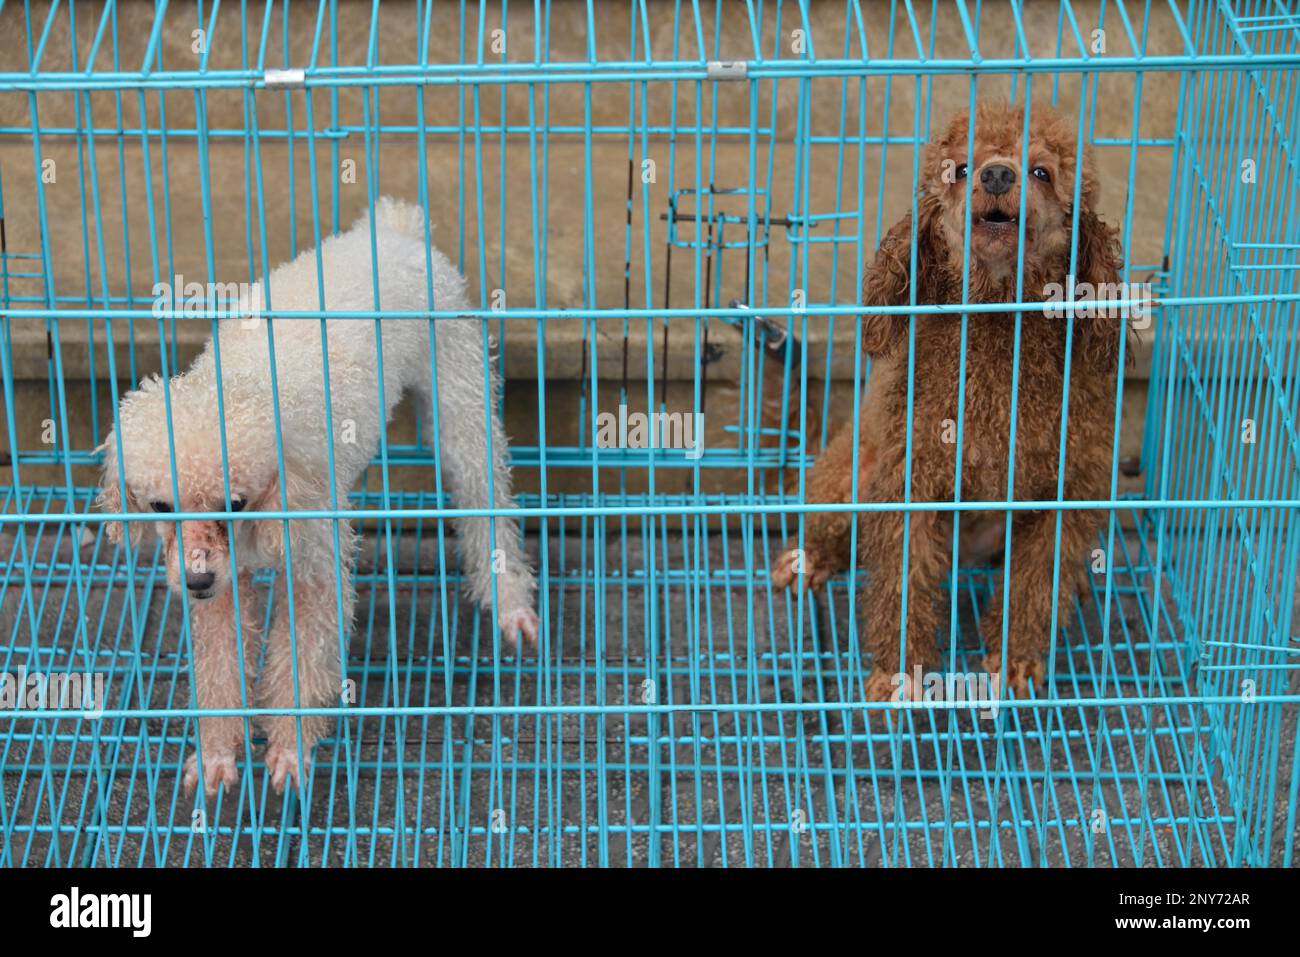 Dogs, Cage, Ho Chi Minh City, Vietnam Stock Photo